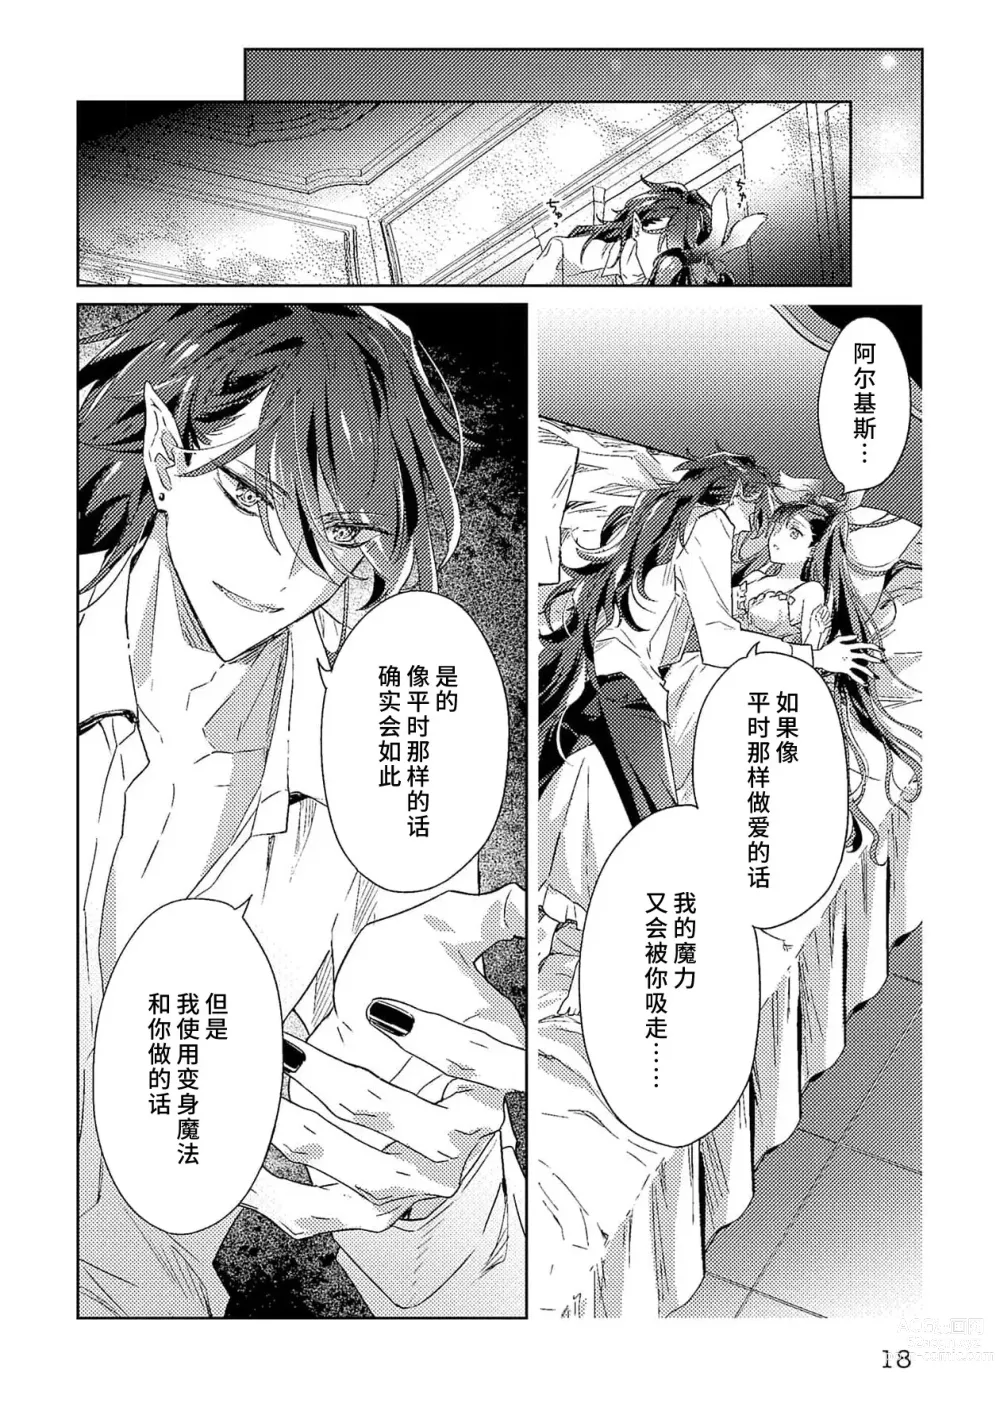 Page 106 of manga 身为恶役千金，堕落于魔界王子身下这条路线真的可以有？ 1-4